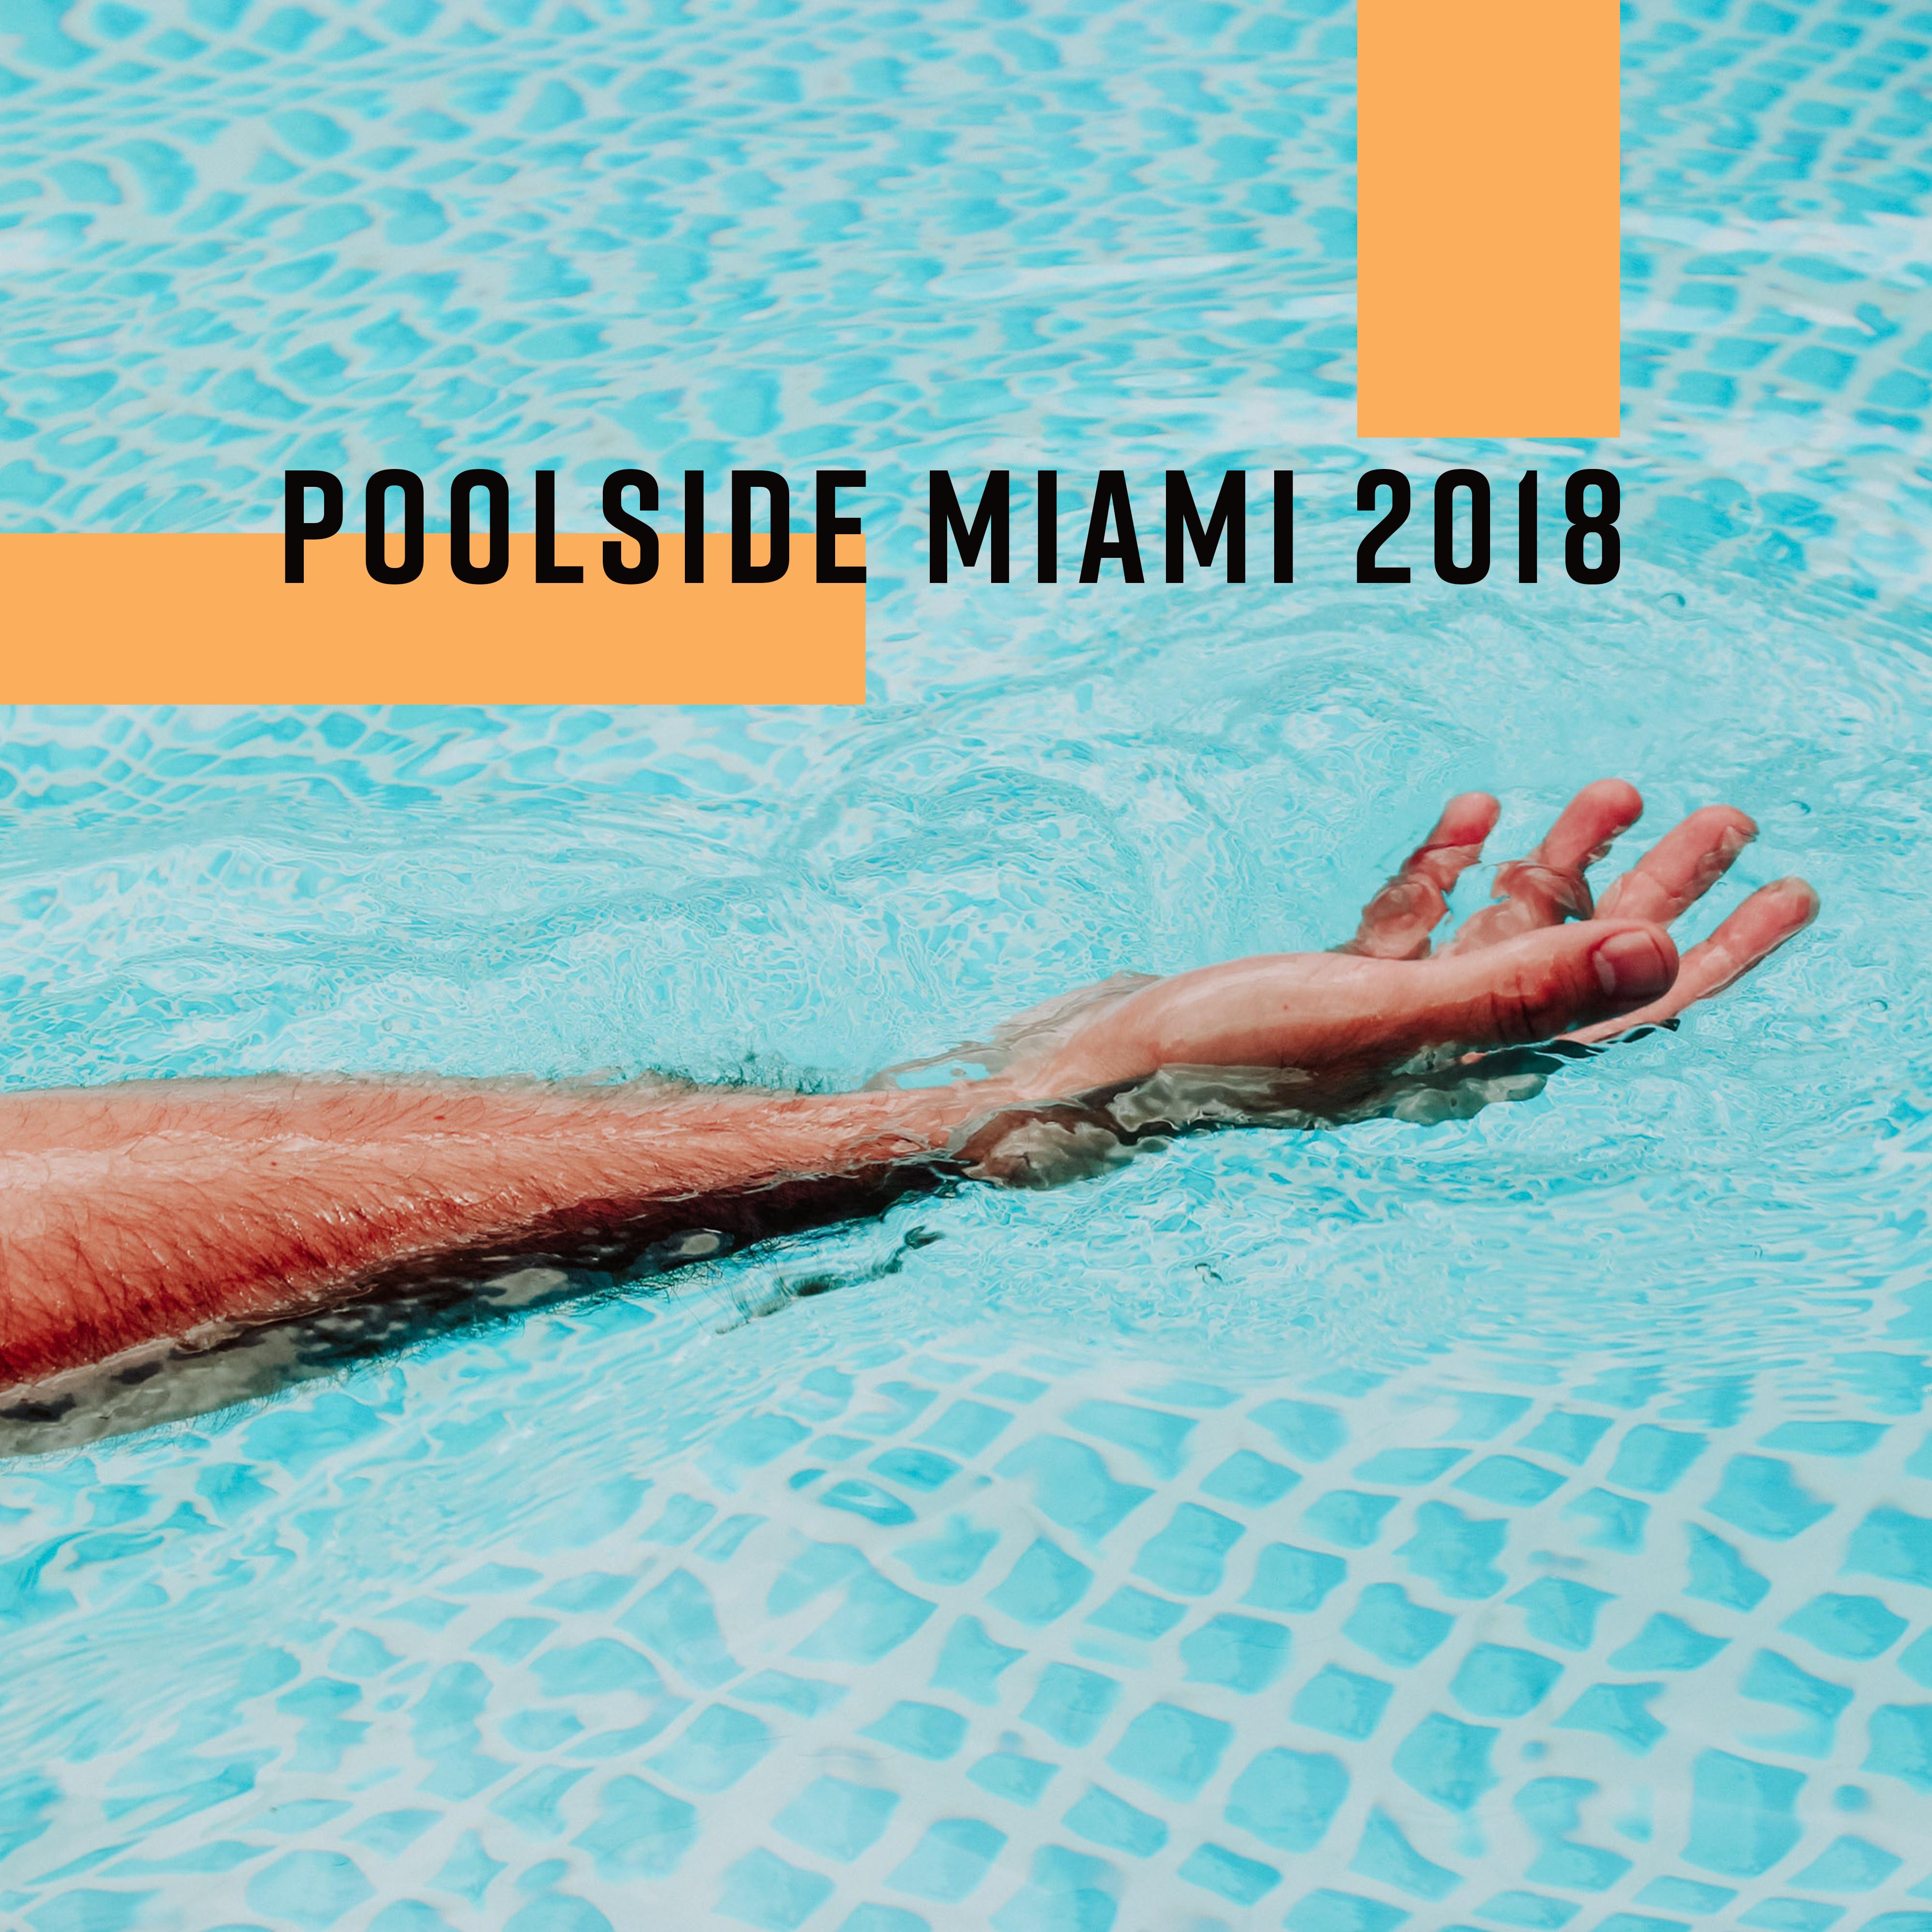 Poolside Miami 2018